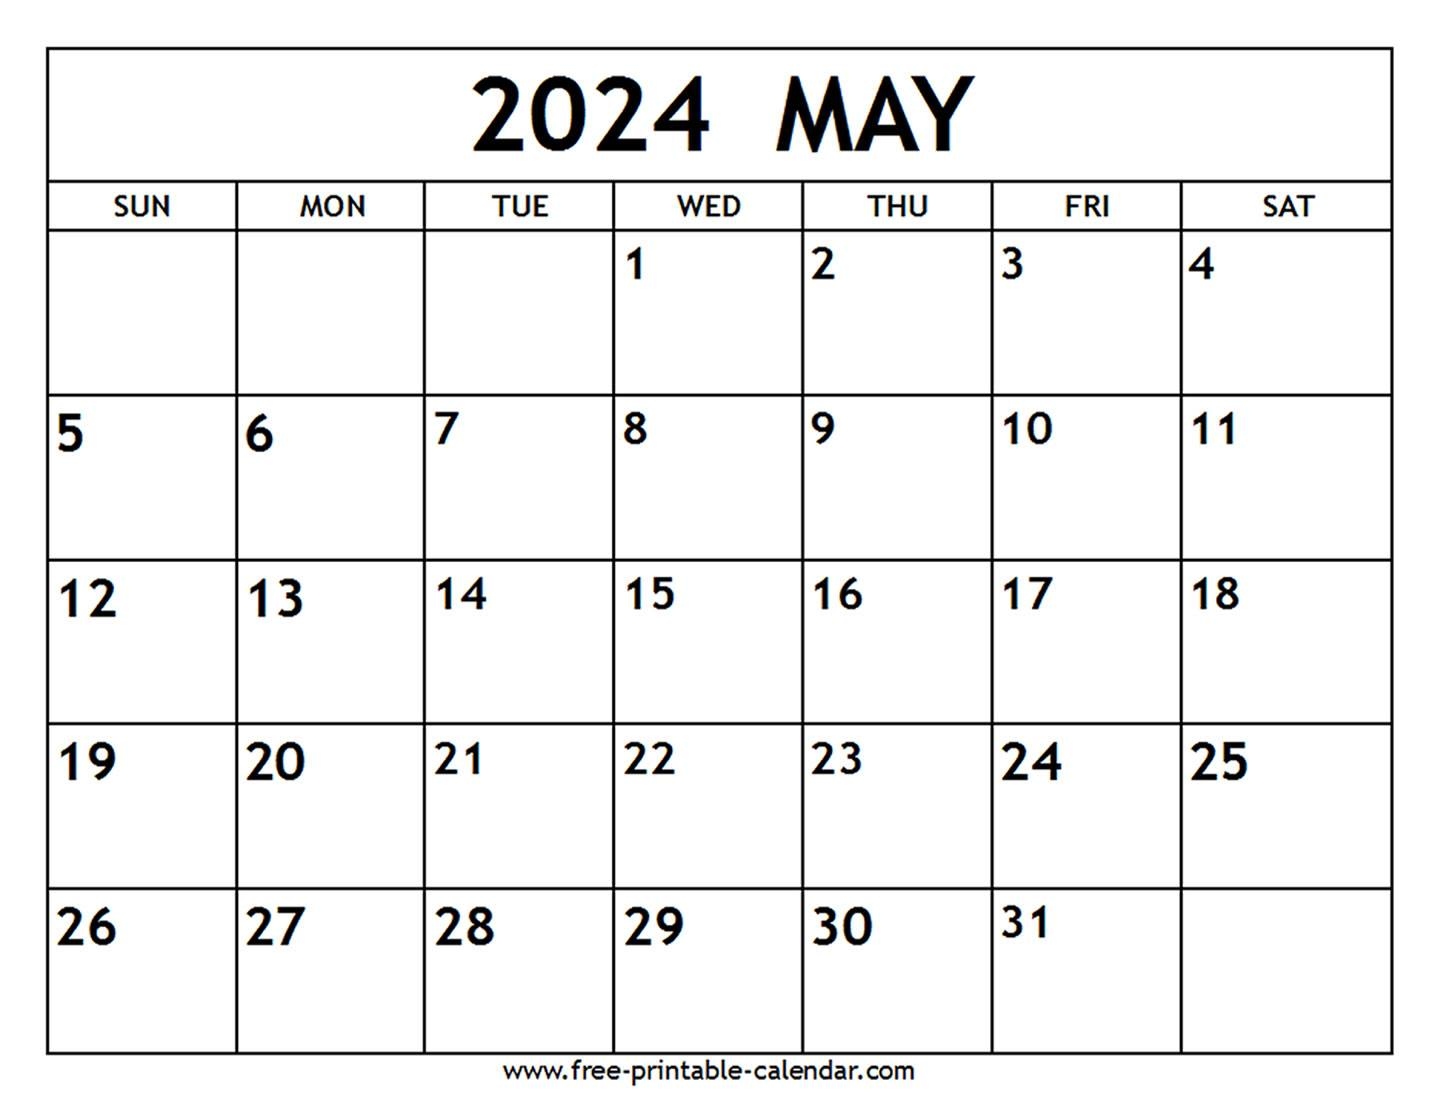 May 2024 Calendar - Free-Printable-Calendar regarding Free Printable Calendar 2024 May June July